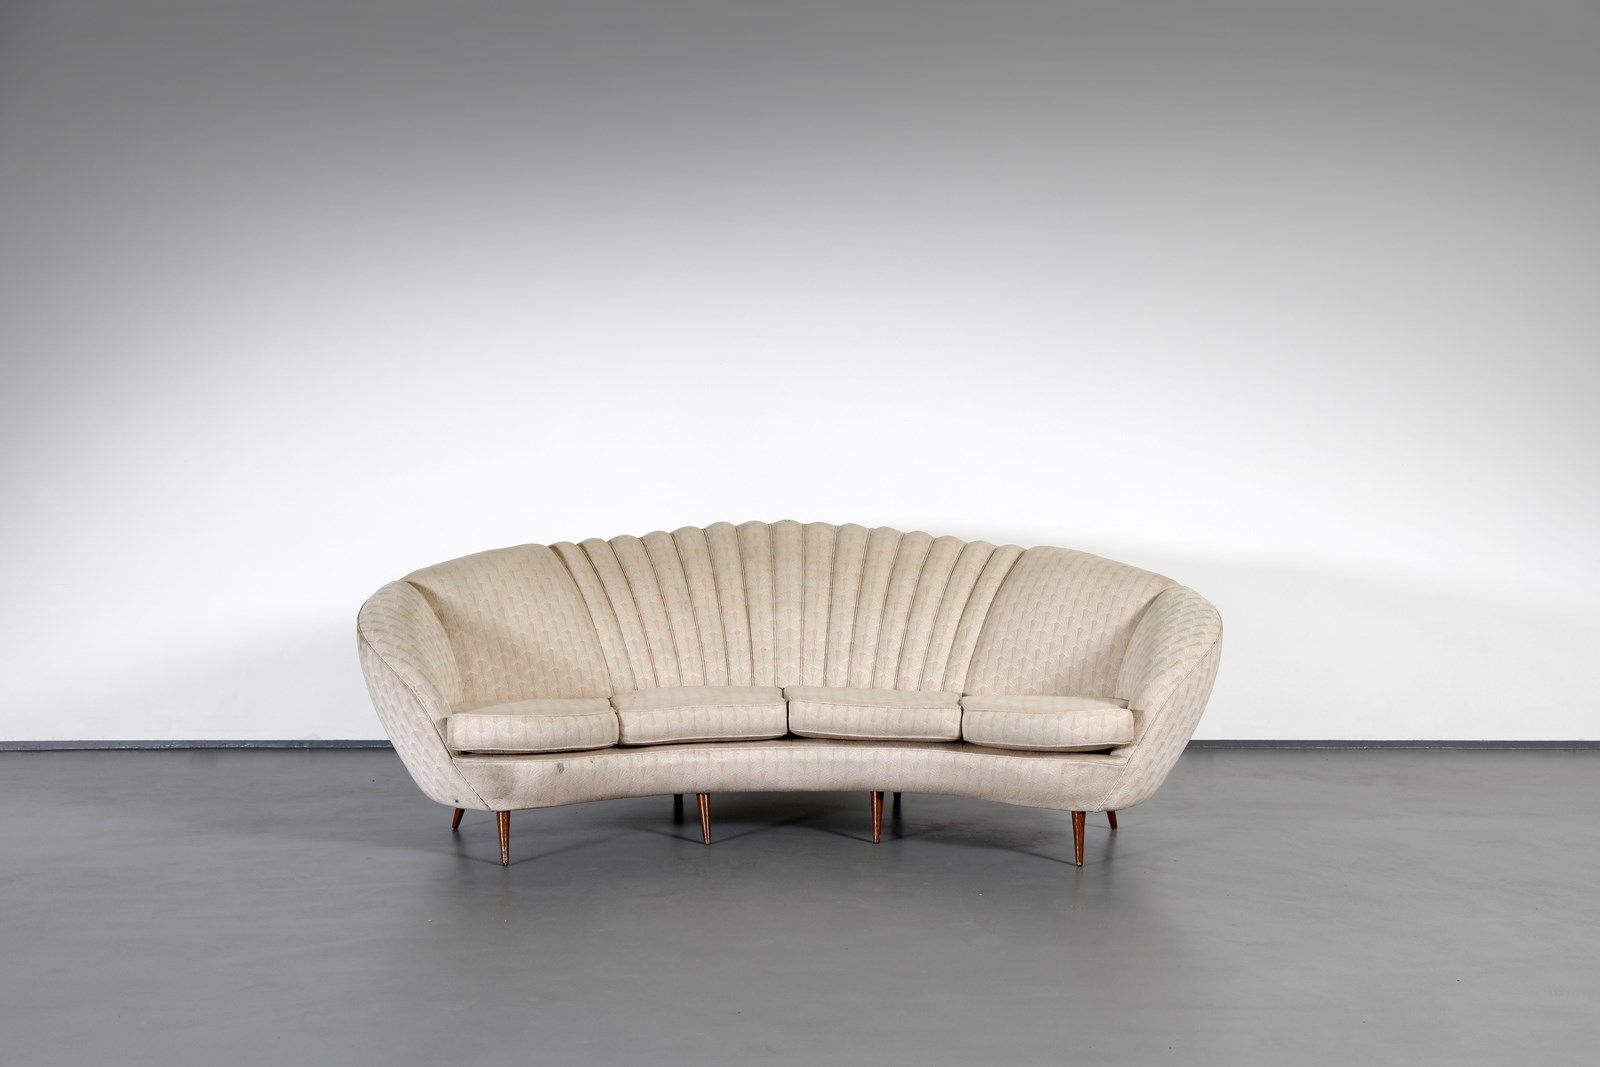 MUNARI FEDERICO FEDERICO 沙发。木头和软垫织物。Cm 240.00 x 85.00 x 120.00. 1950年代。